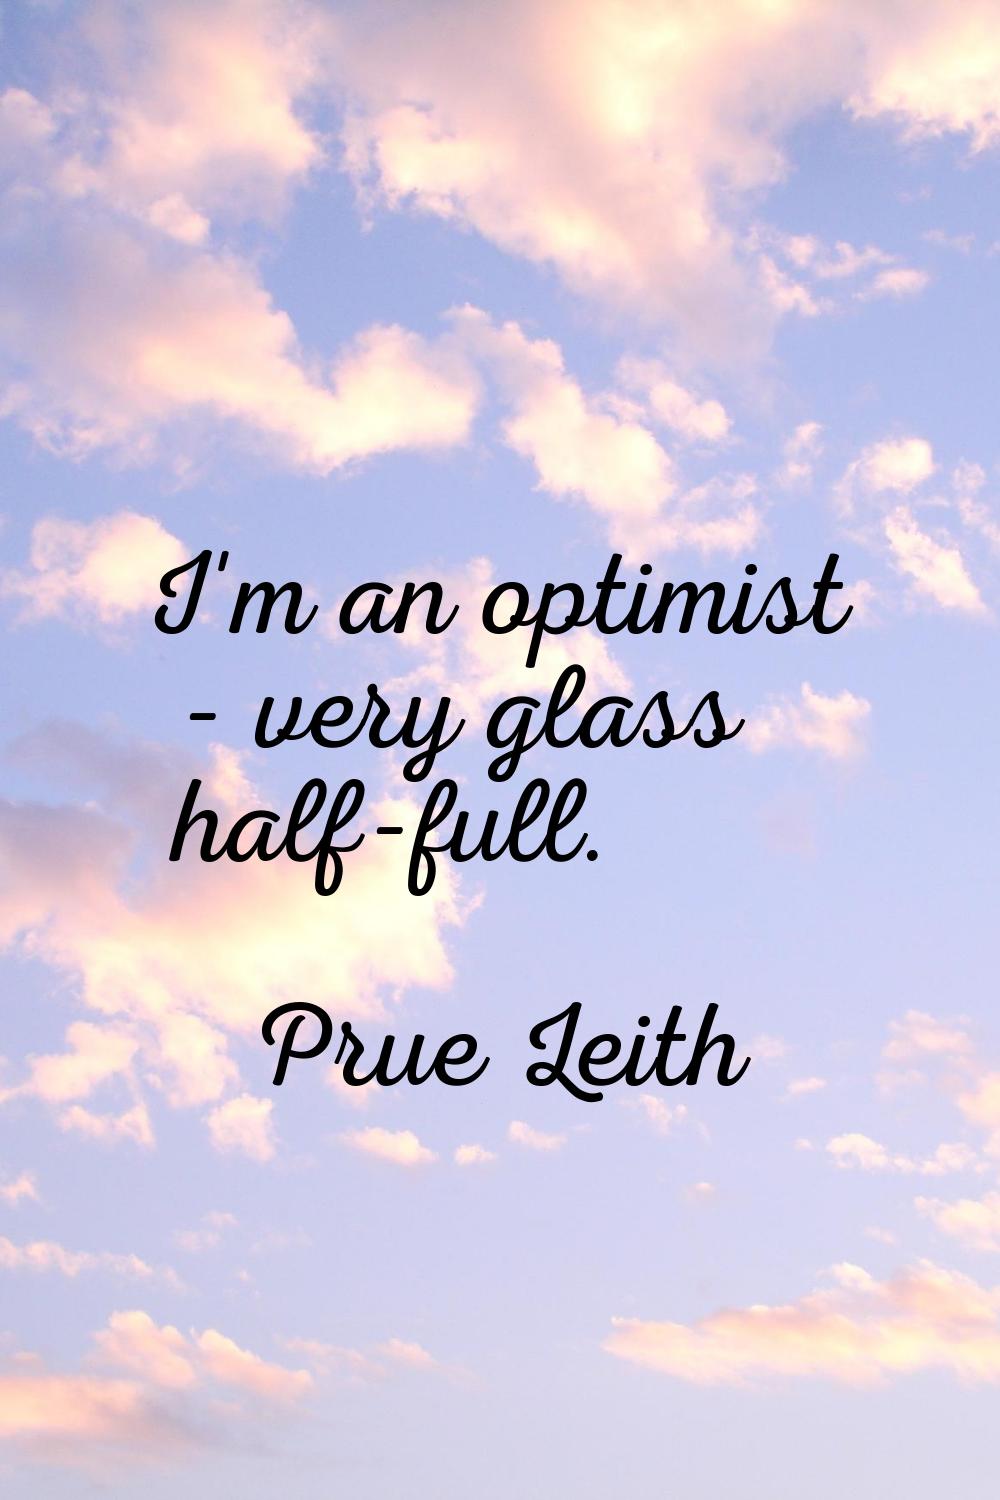 I'm an optimist - very glass half-full.